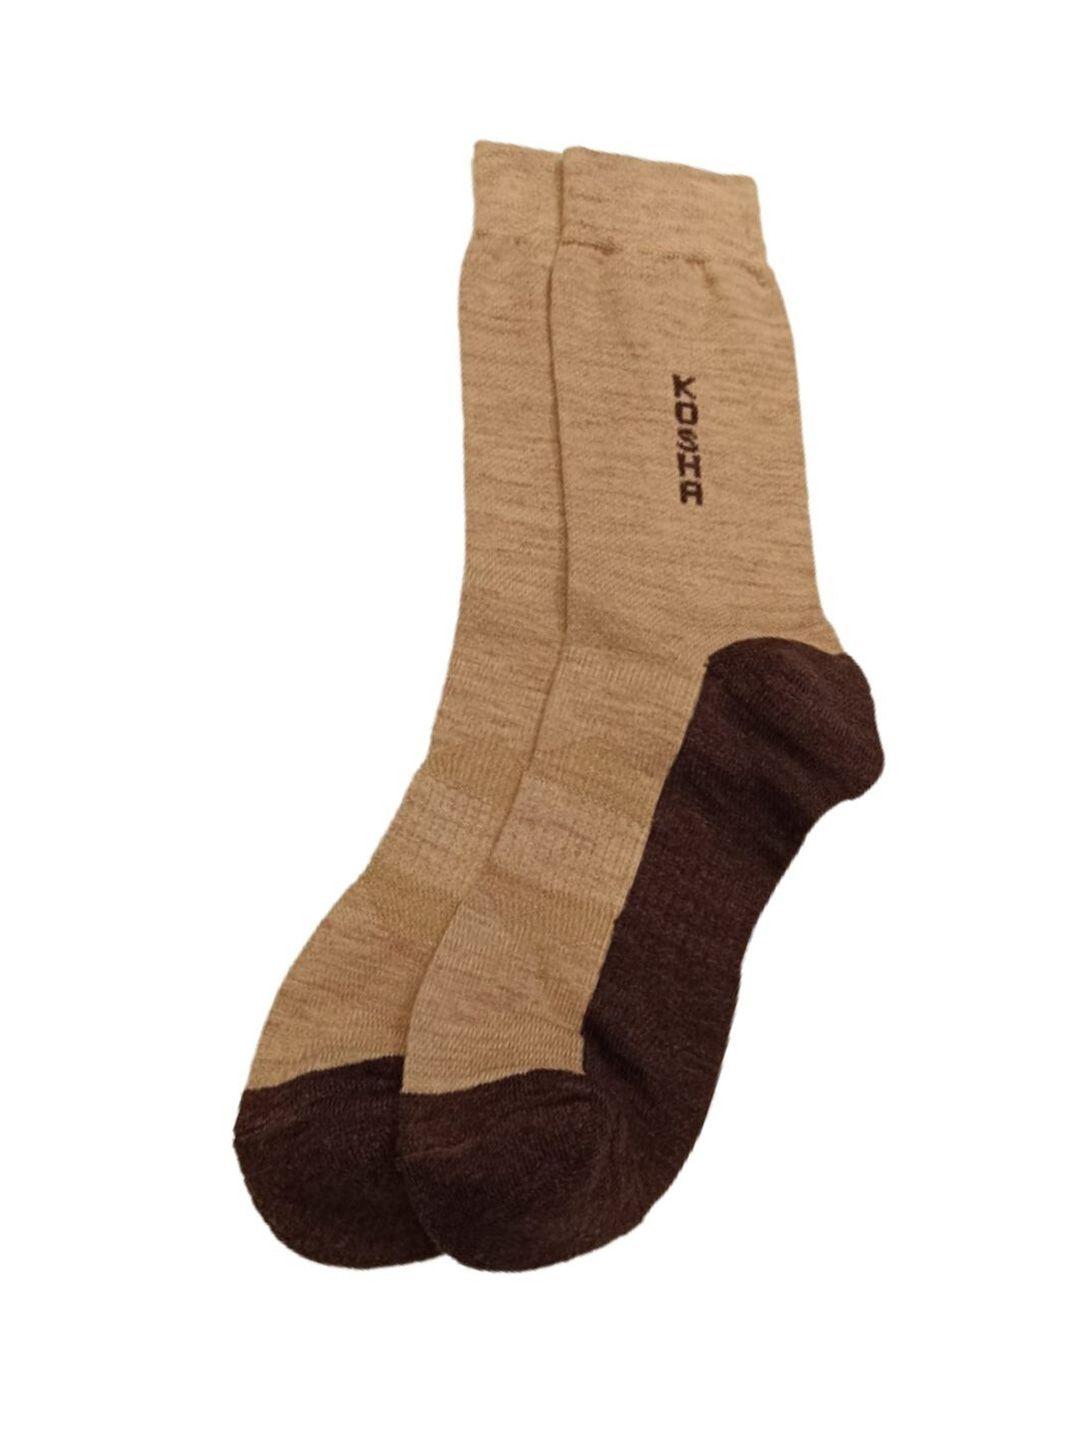 kosha men merino wool regular length warm technical socks